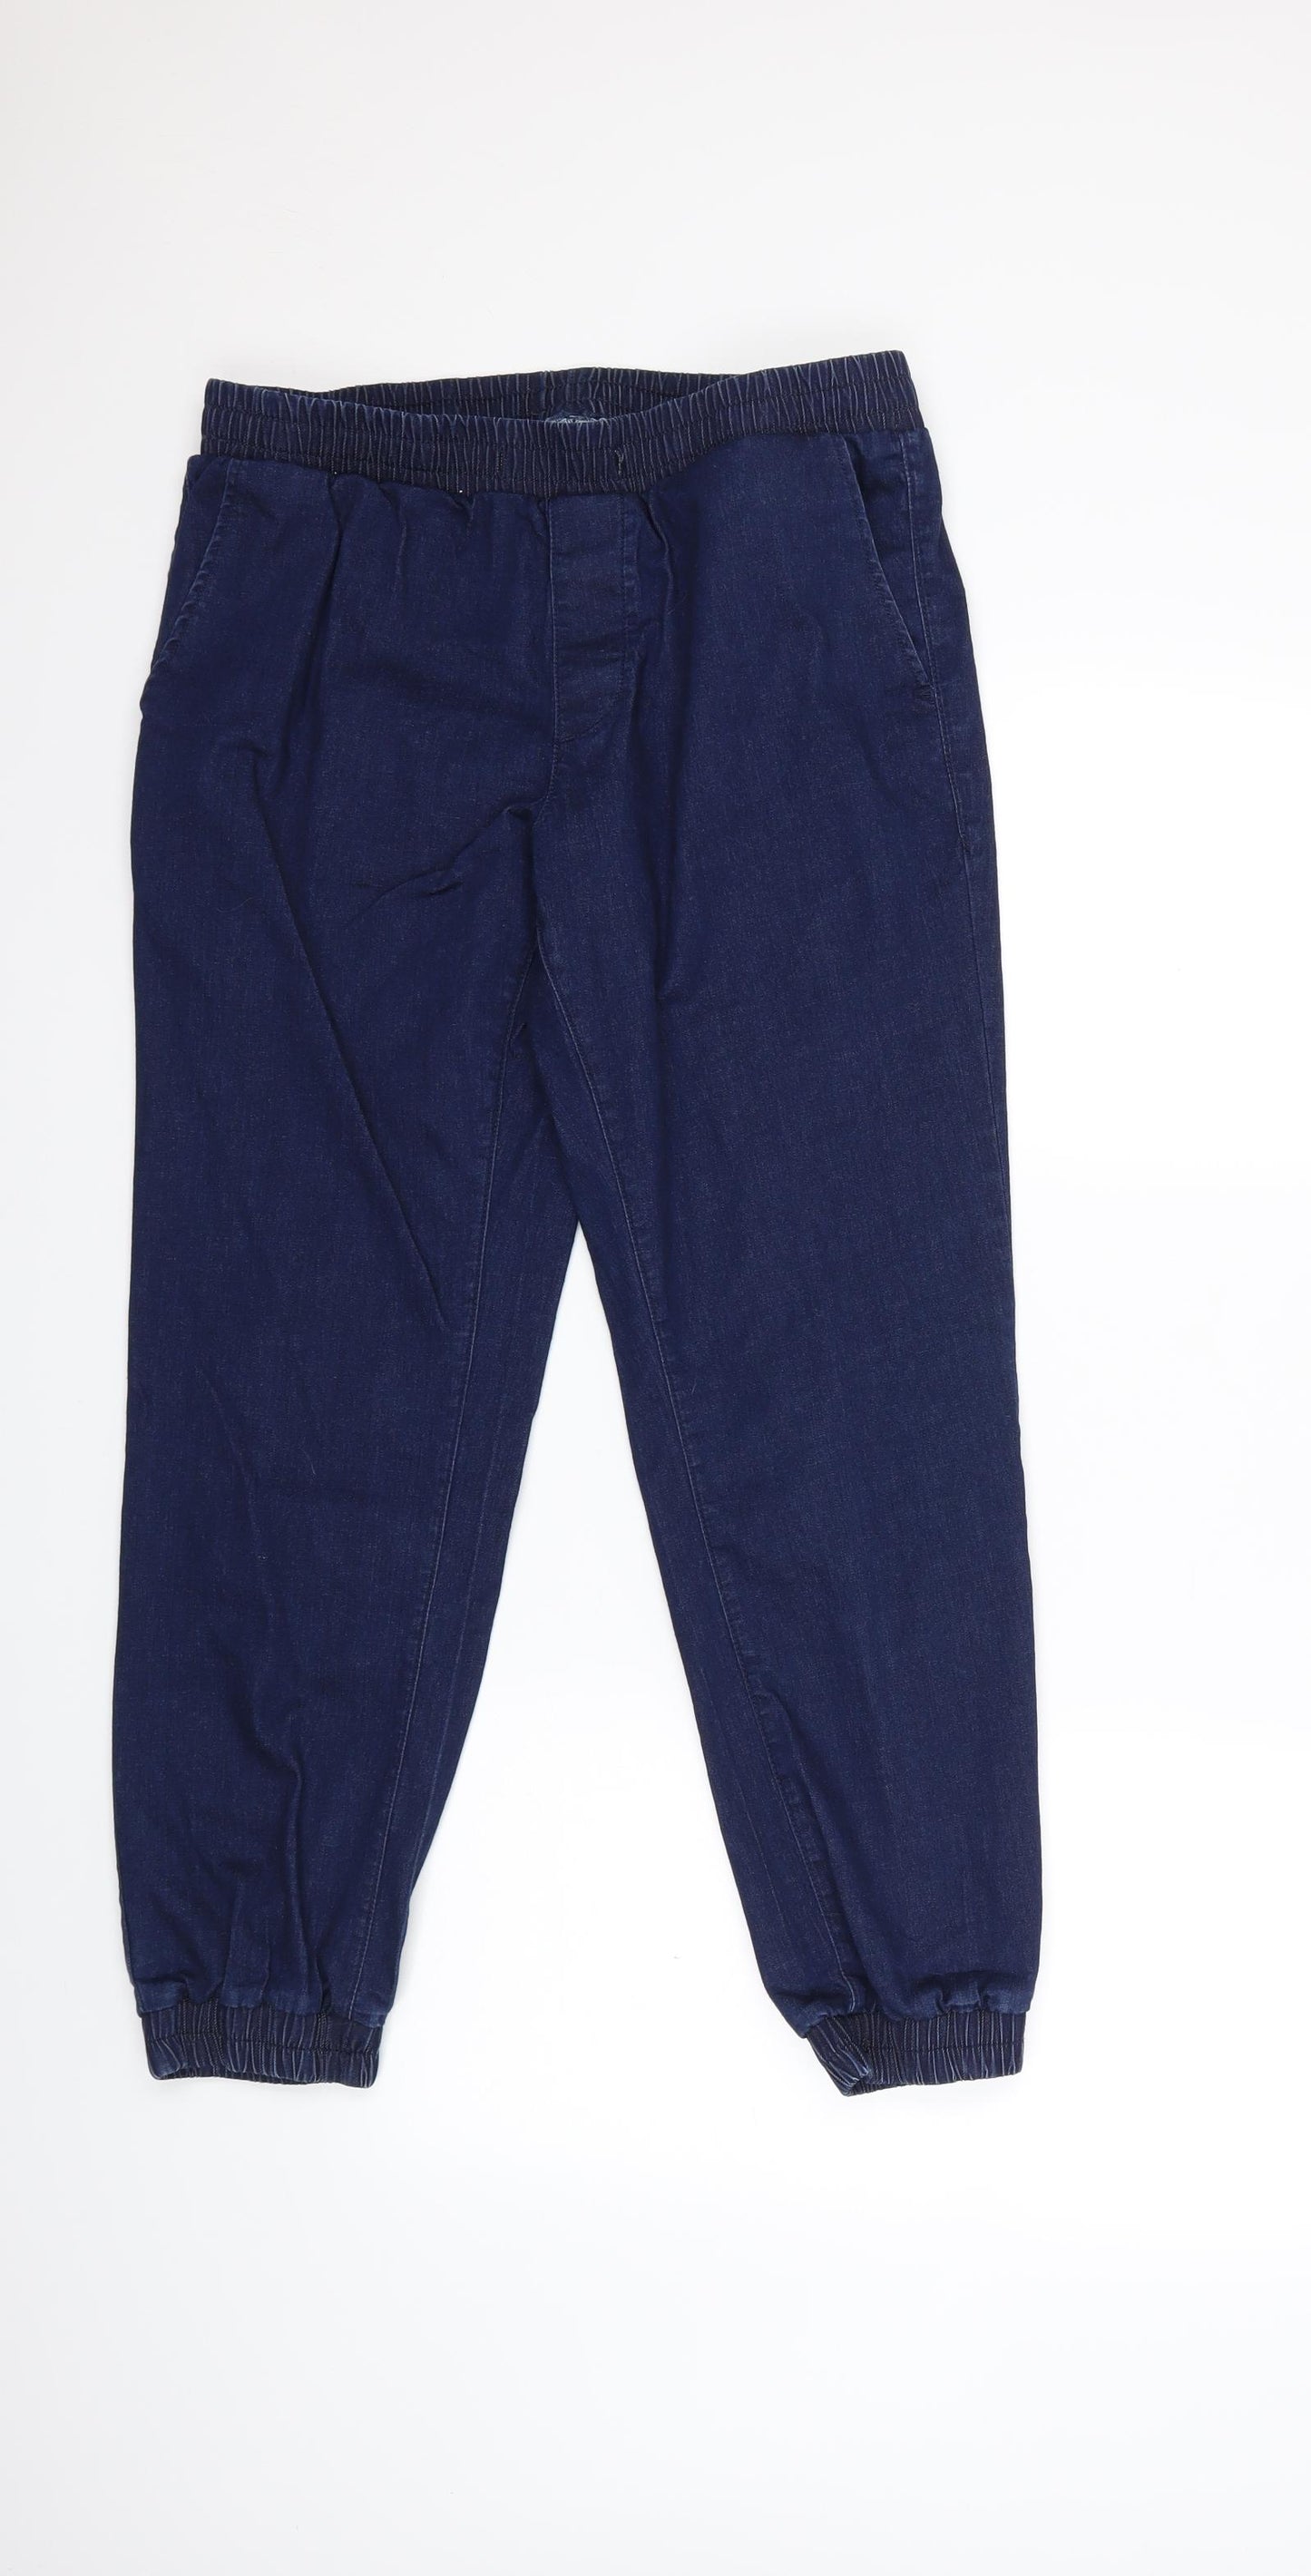 Baleno Womens Blue  Denim Tapered Jeans Size L L25 in